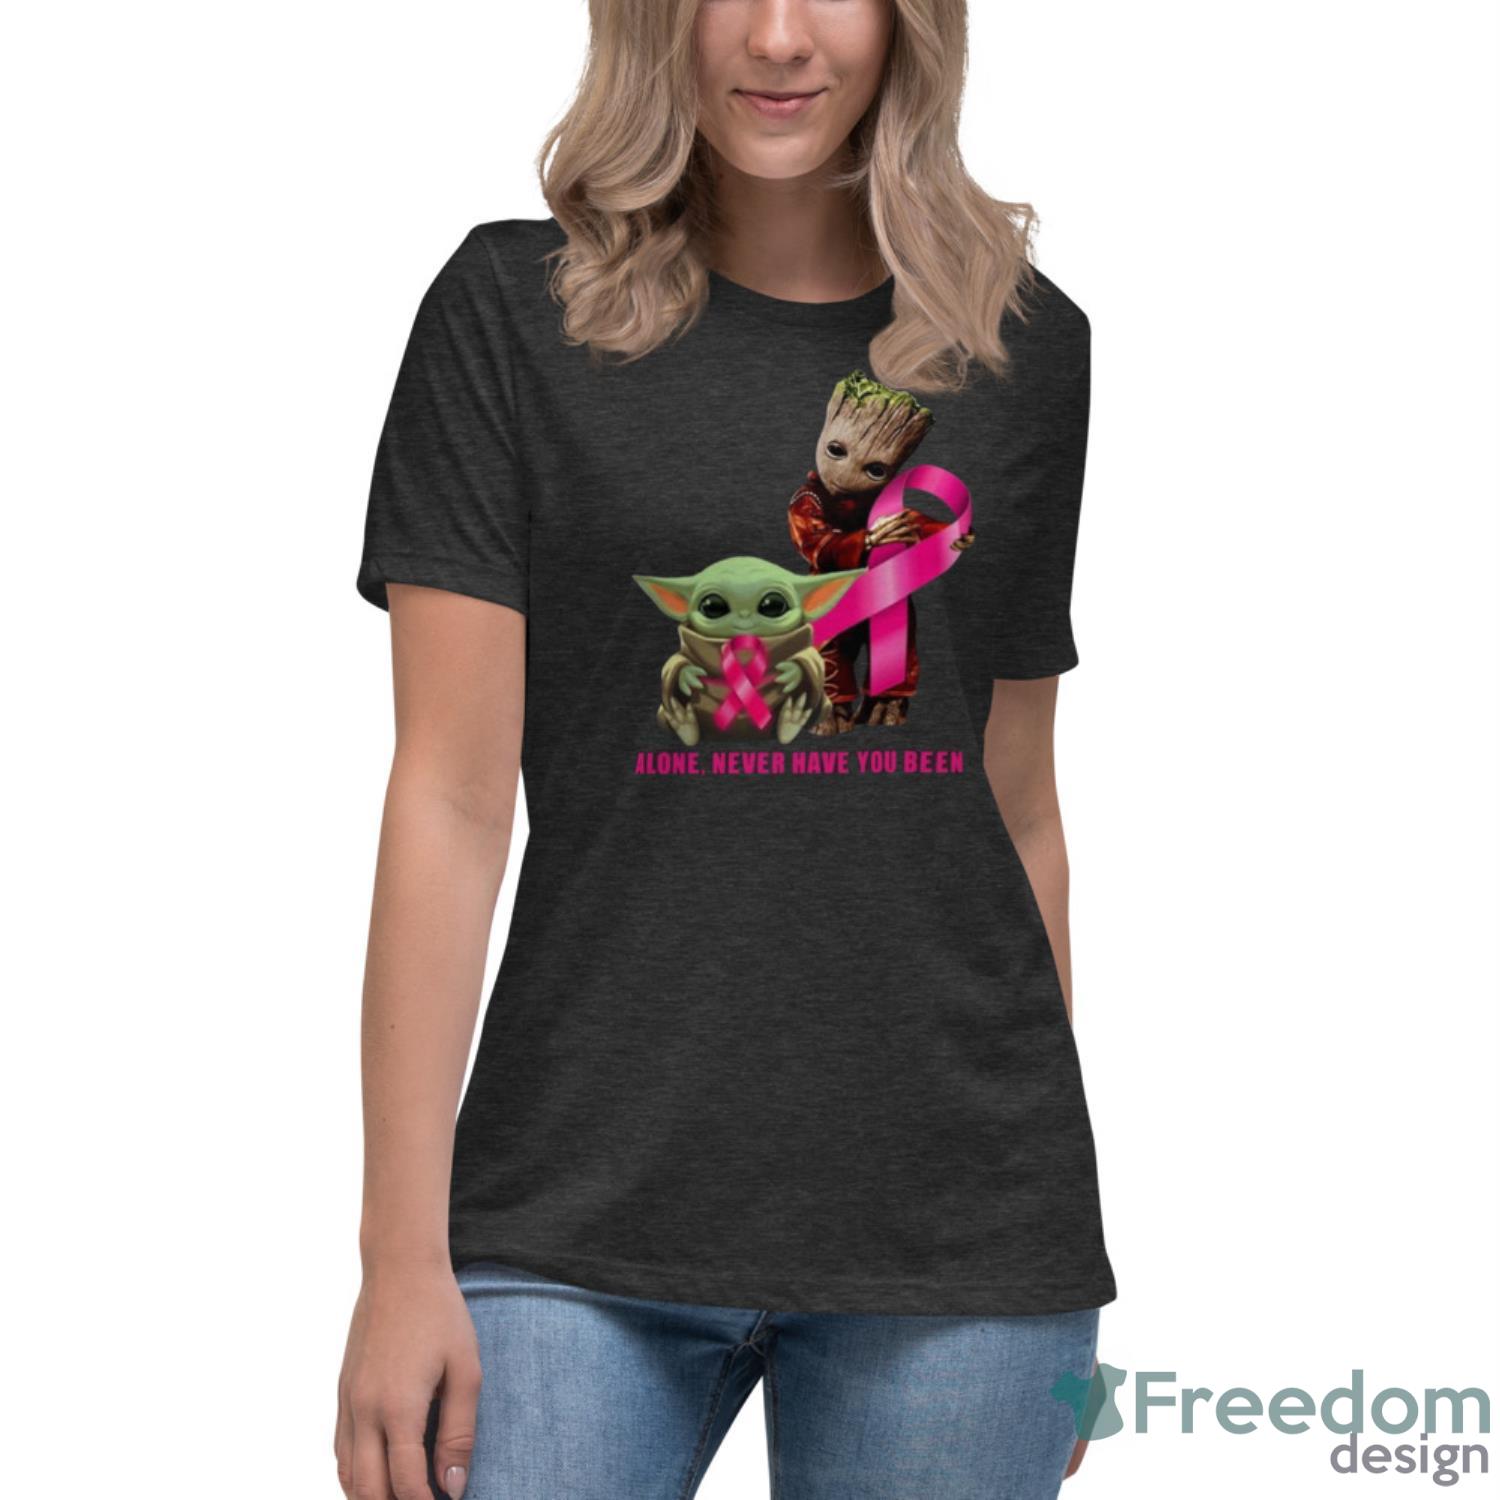 Baby Yoda And Groot Pocket Hug Pink Ribbon Never Have You Been Alone Shirt